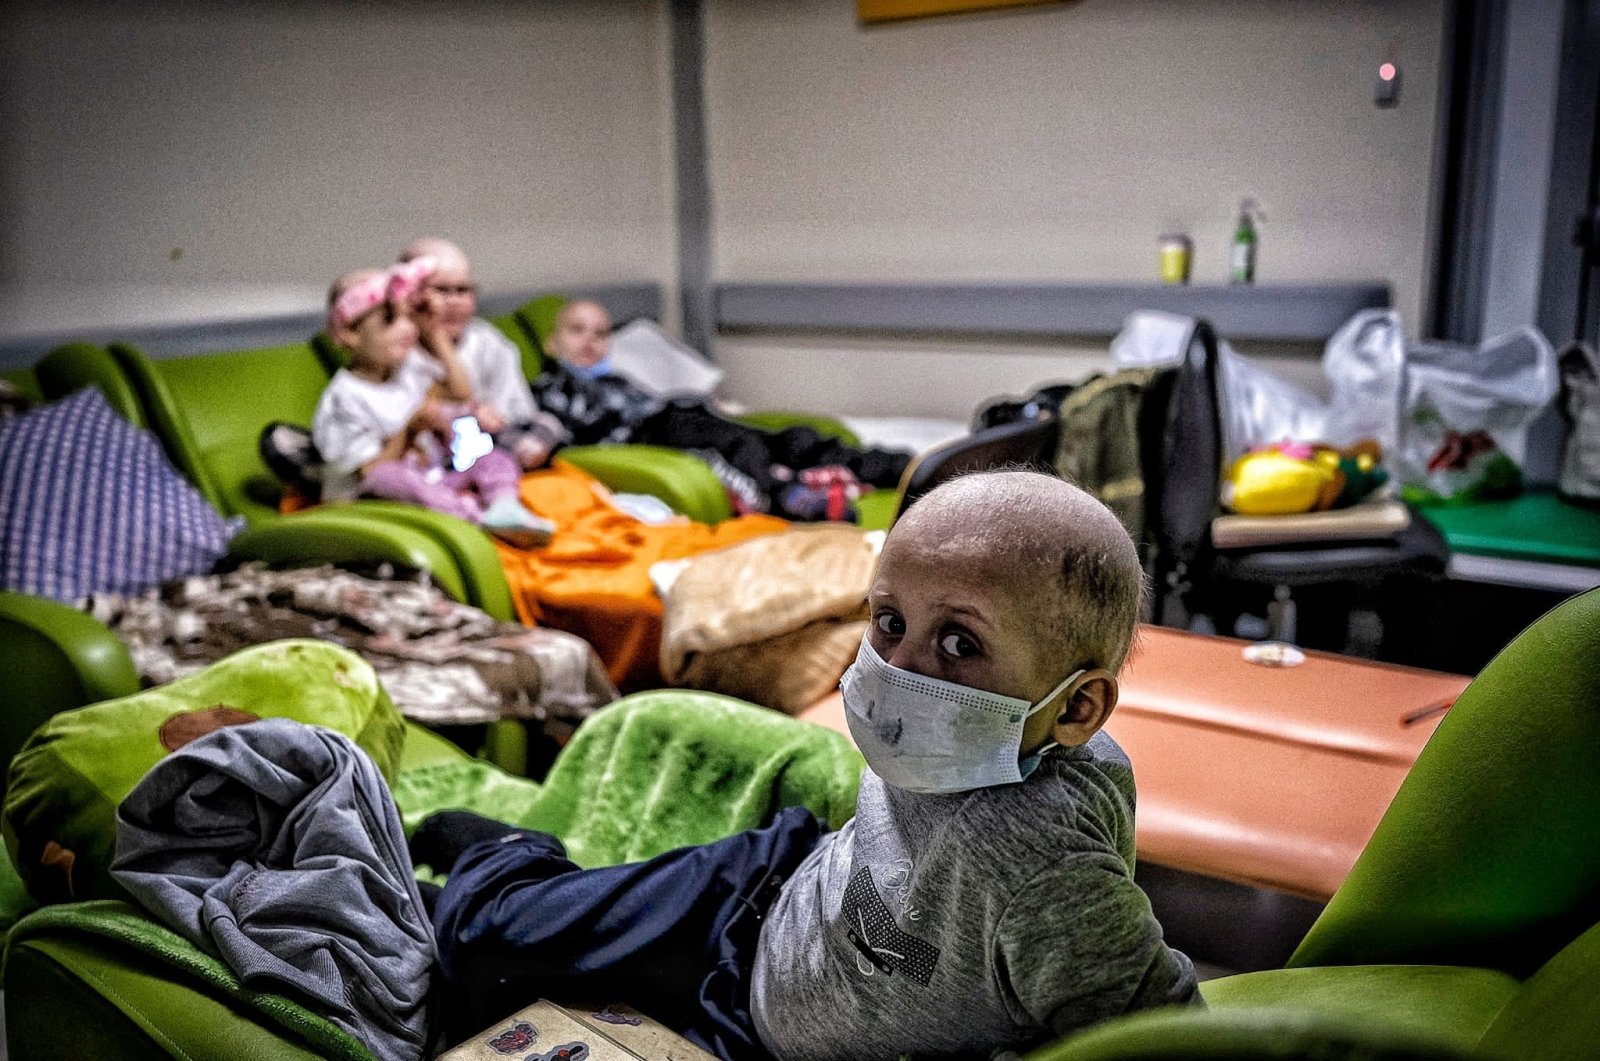 Children suffering from leukemia are seen at the Okhmatdyt hospital in Kyiv, Ukraine, Feb. 28, 2022. (Photos by Uğur Yıldırım)